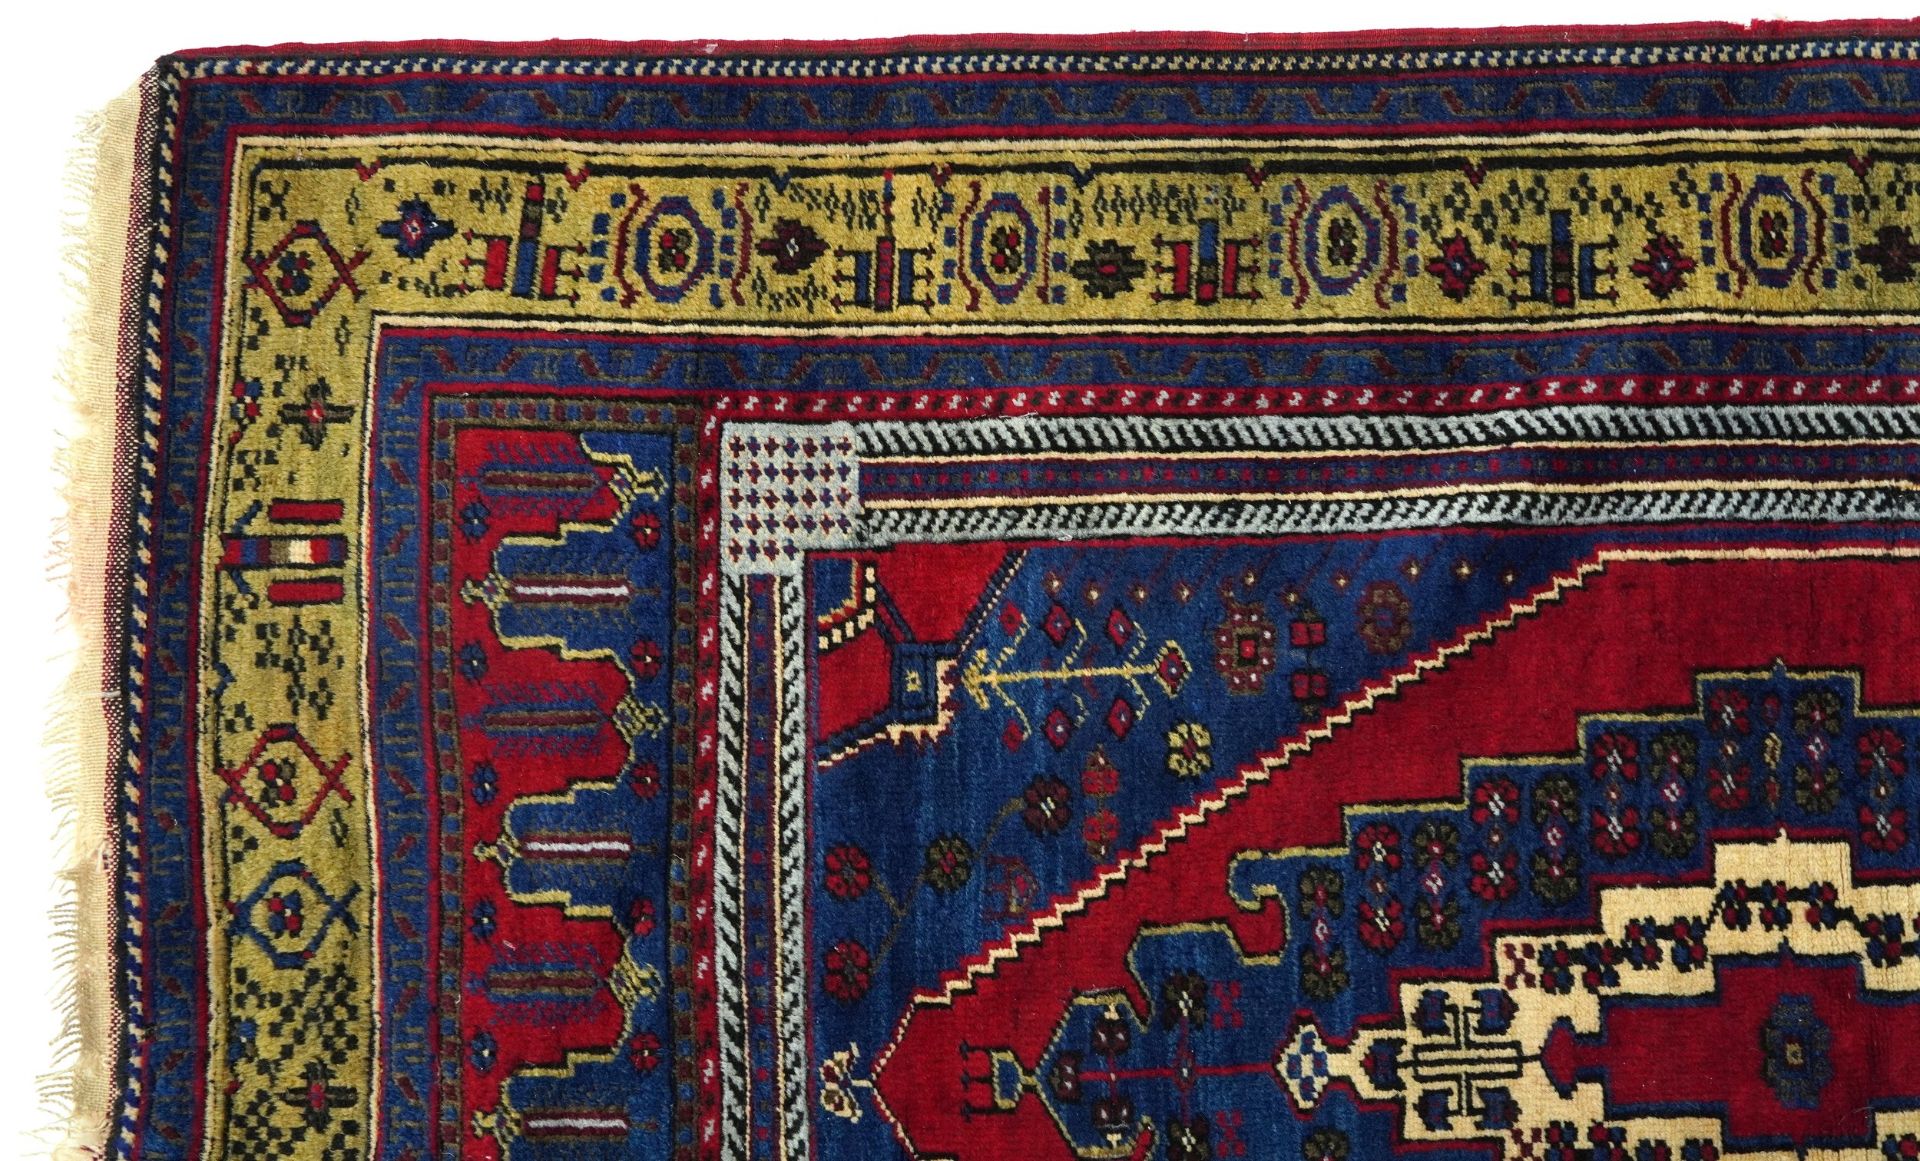 Rectangular Turkish rug, with all over geometric design, 200cm x 120cm - Image 2 of 6